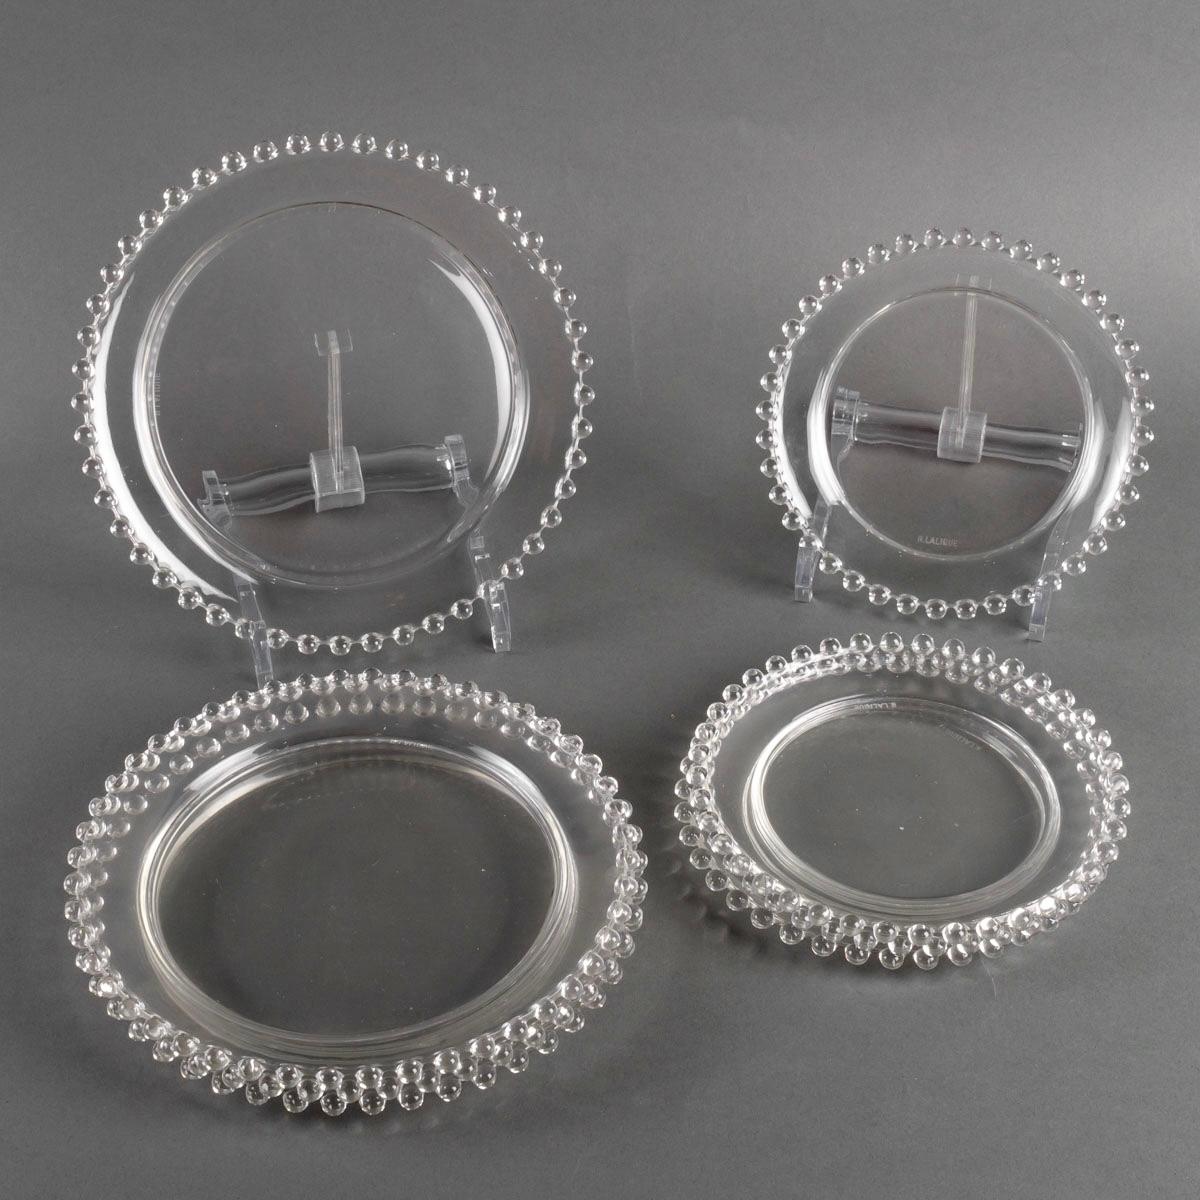 Set of tablewares plates 